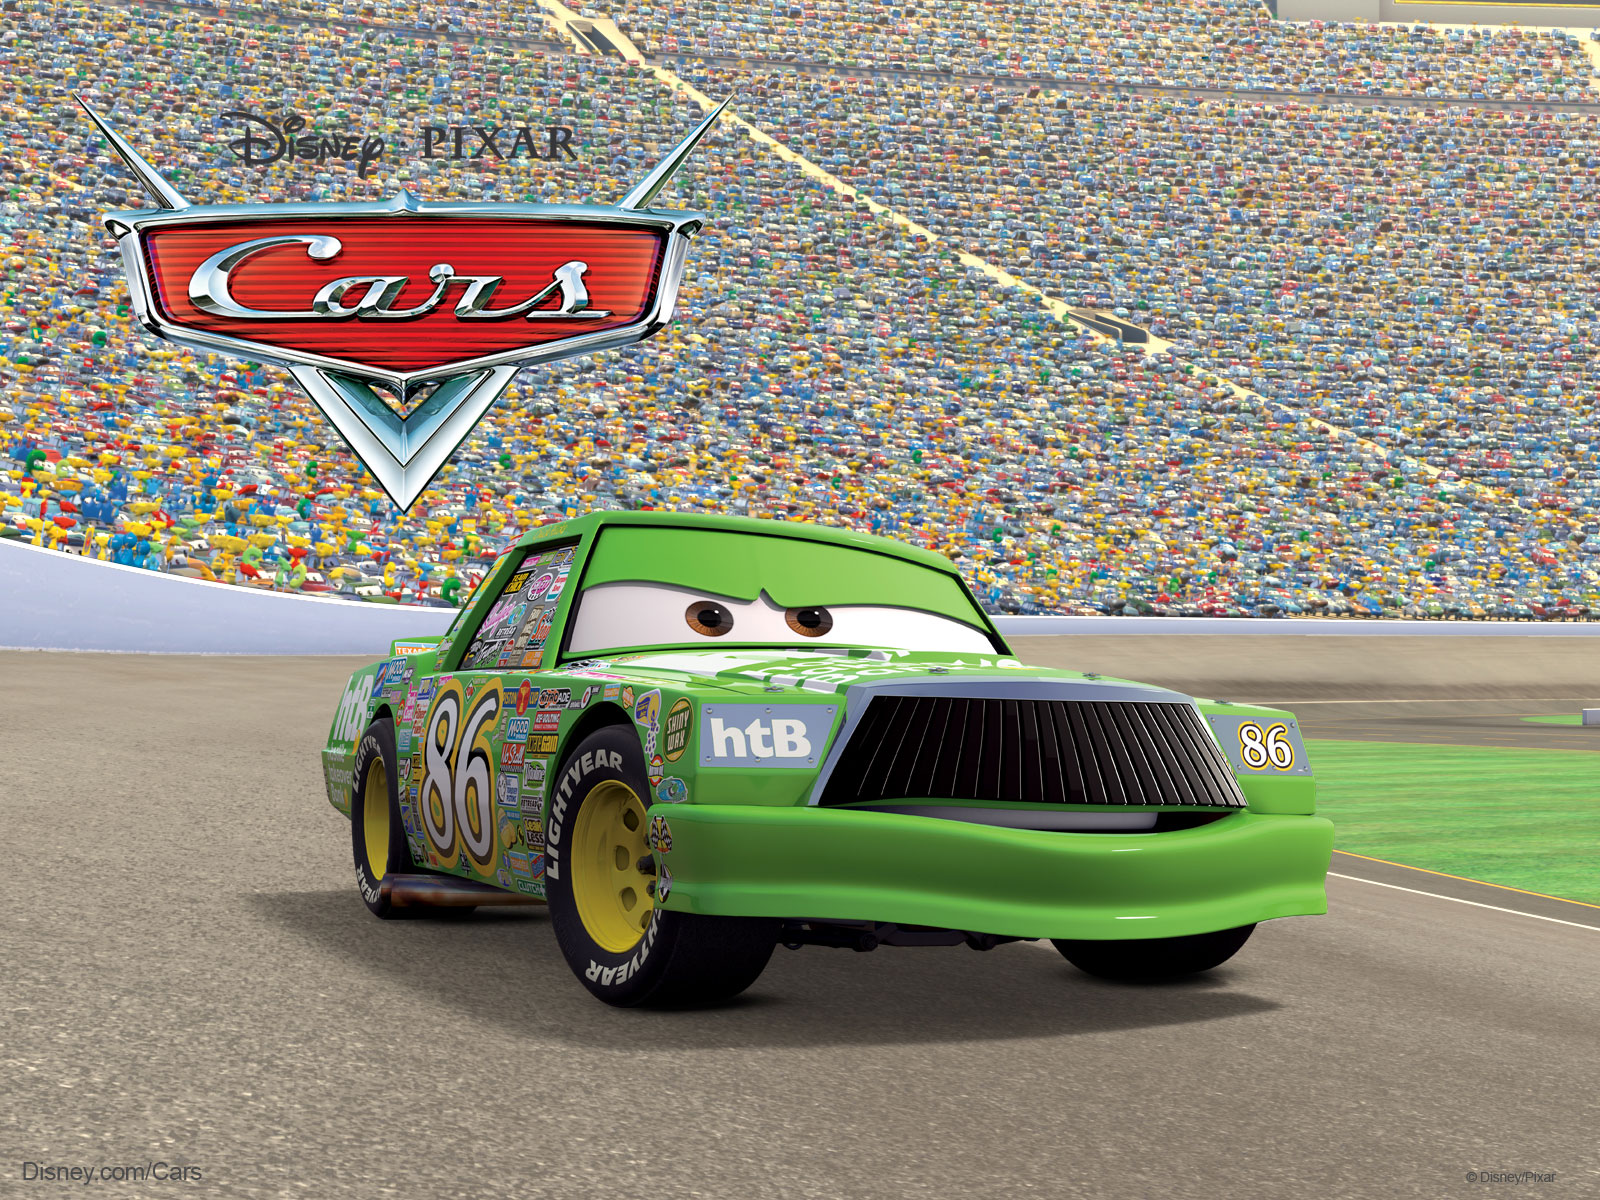 Chick Hicks Race Car from Pixar’s Cars Desktop Wallpaper